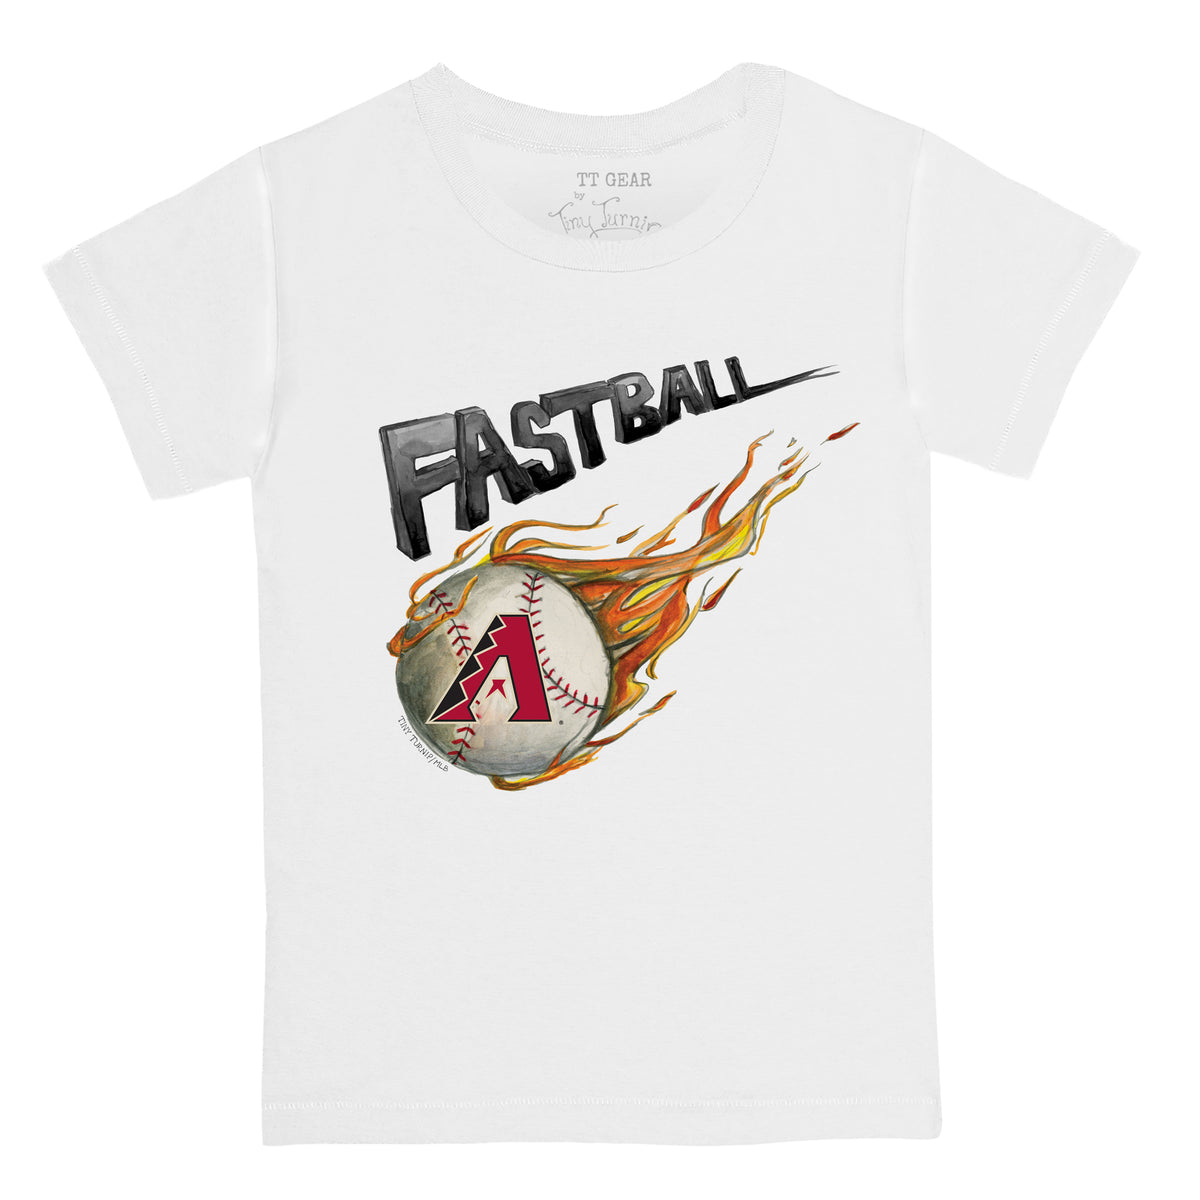 Arizona Diamondbacks Fastball Tee Shirt